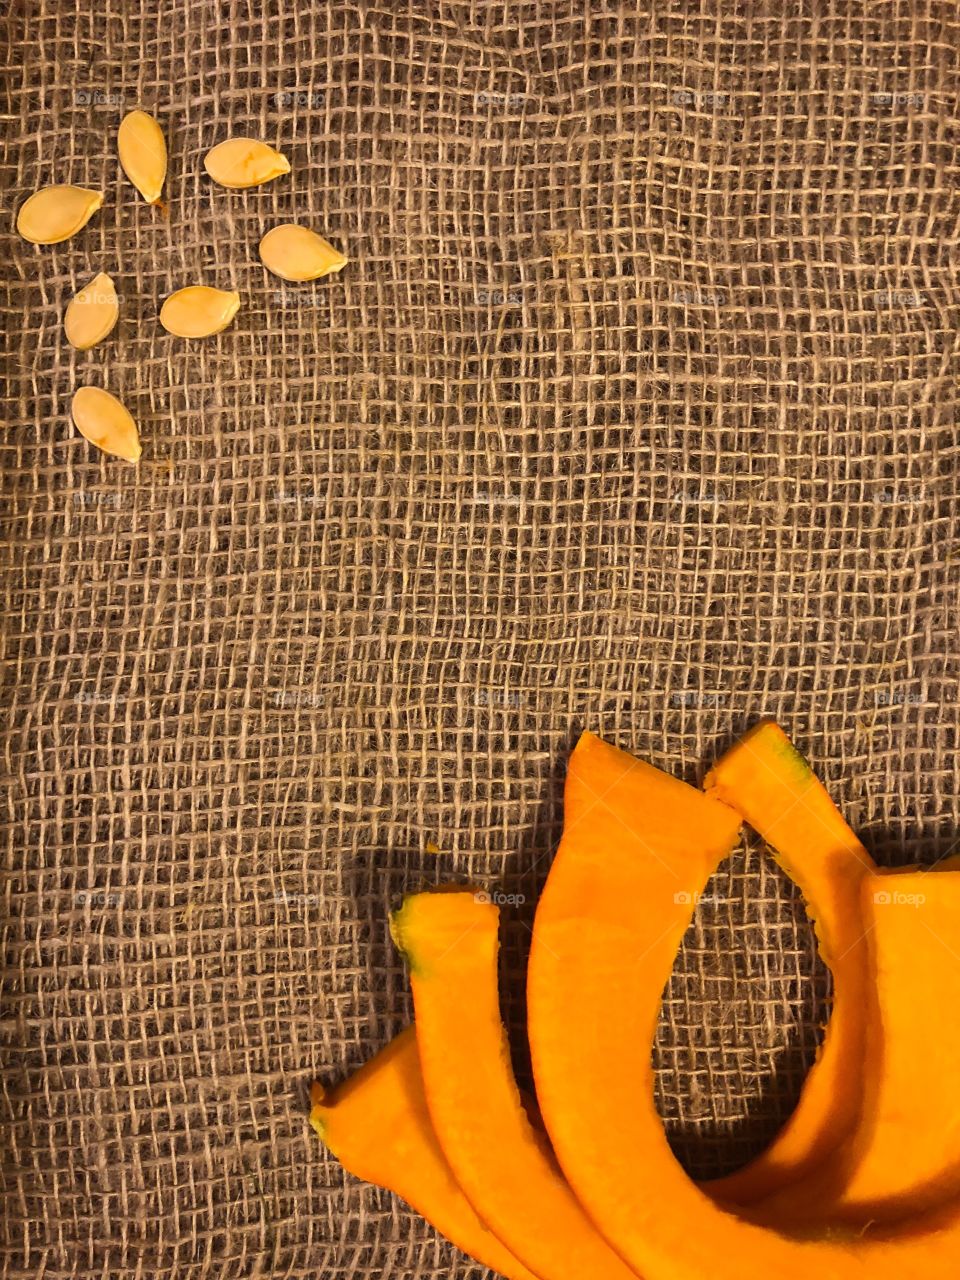 Pumpkin sackcloth background 